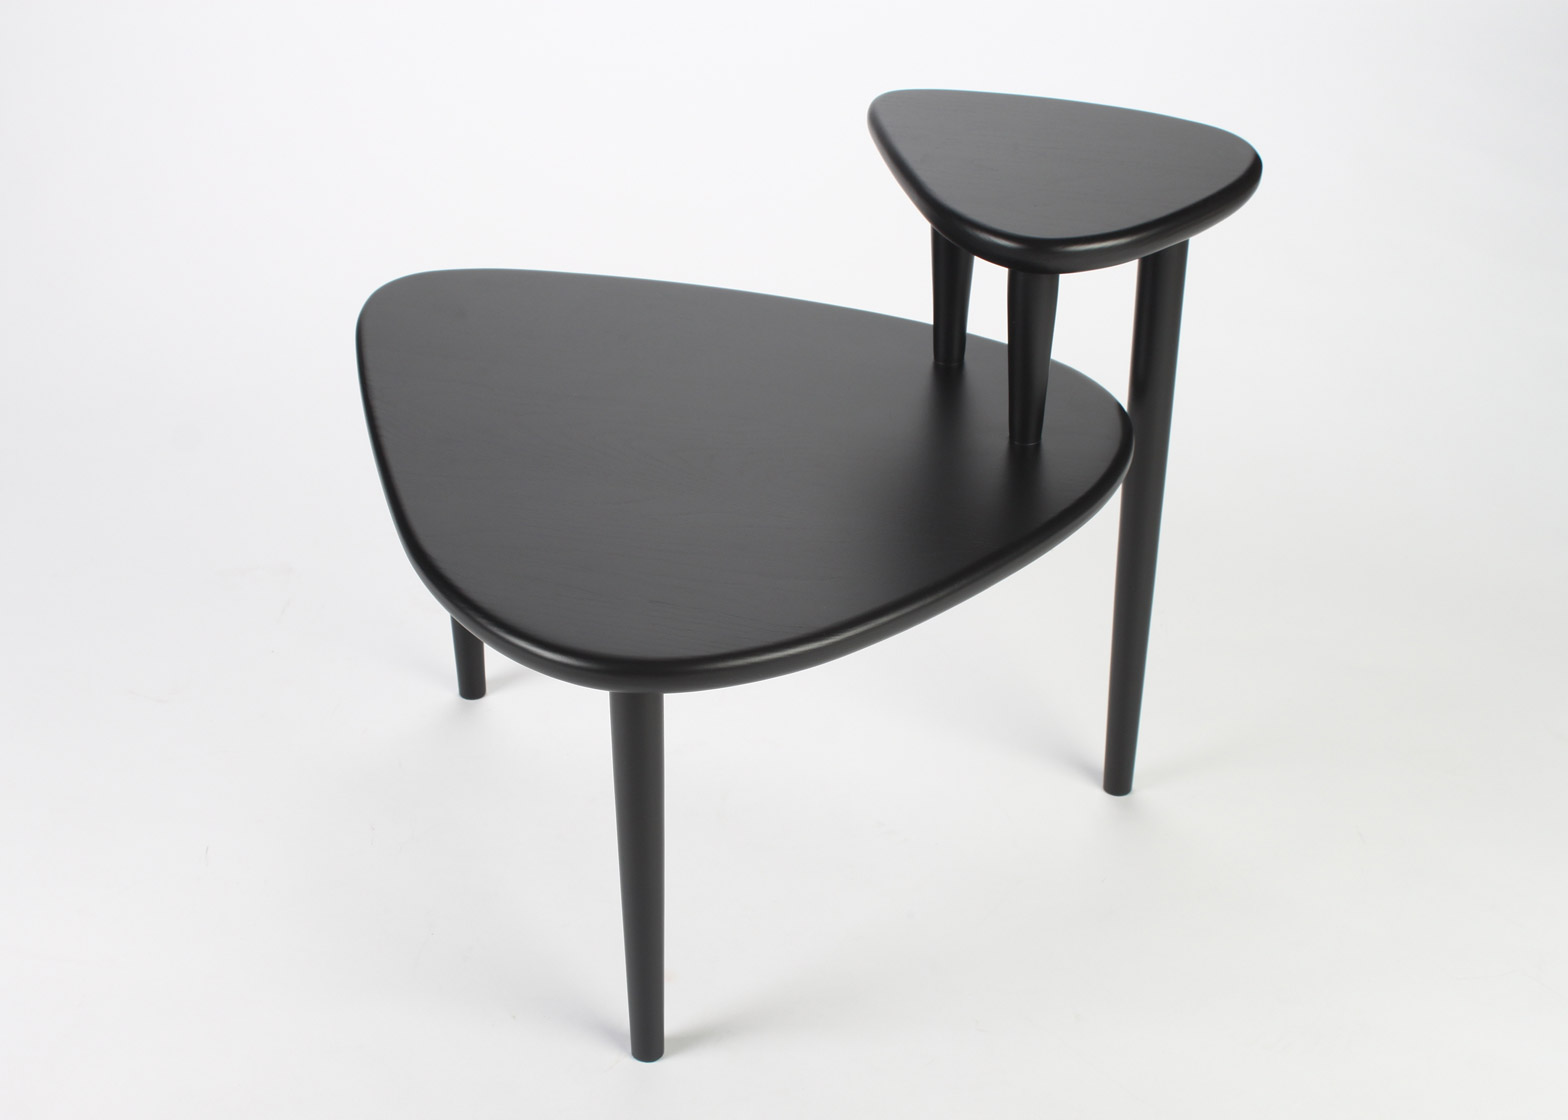 sarma-stool-sebiha-macit-graduate-project-2016-furniture-design-futuristic-rubber_dezeen_1568_0